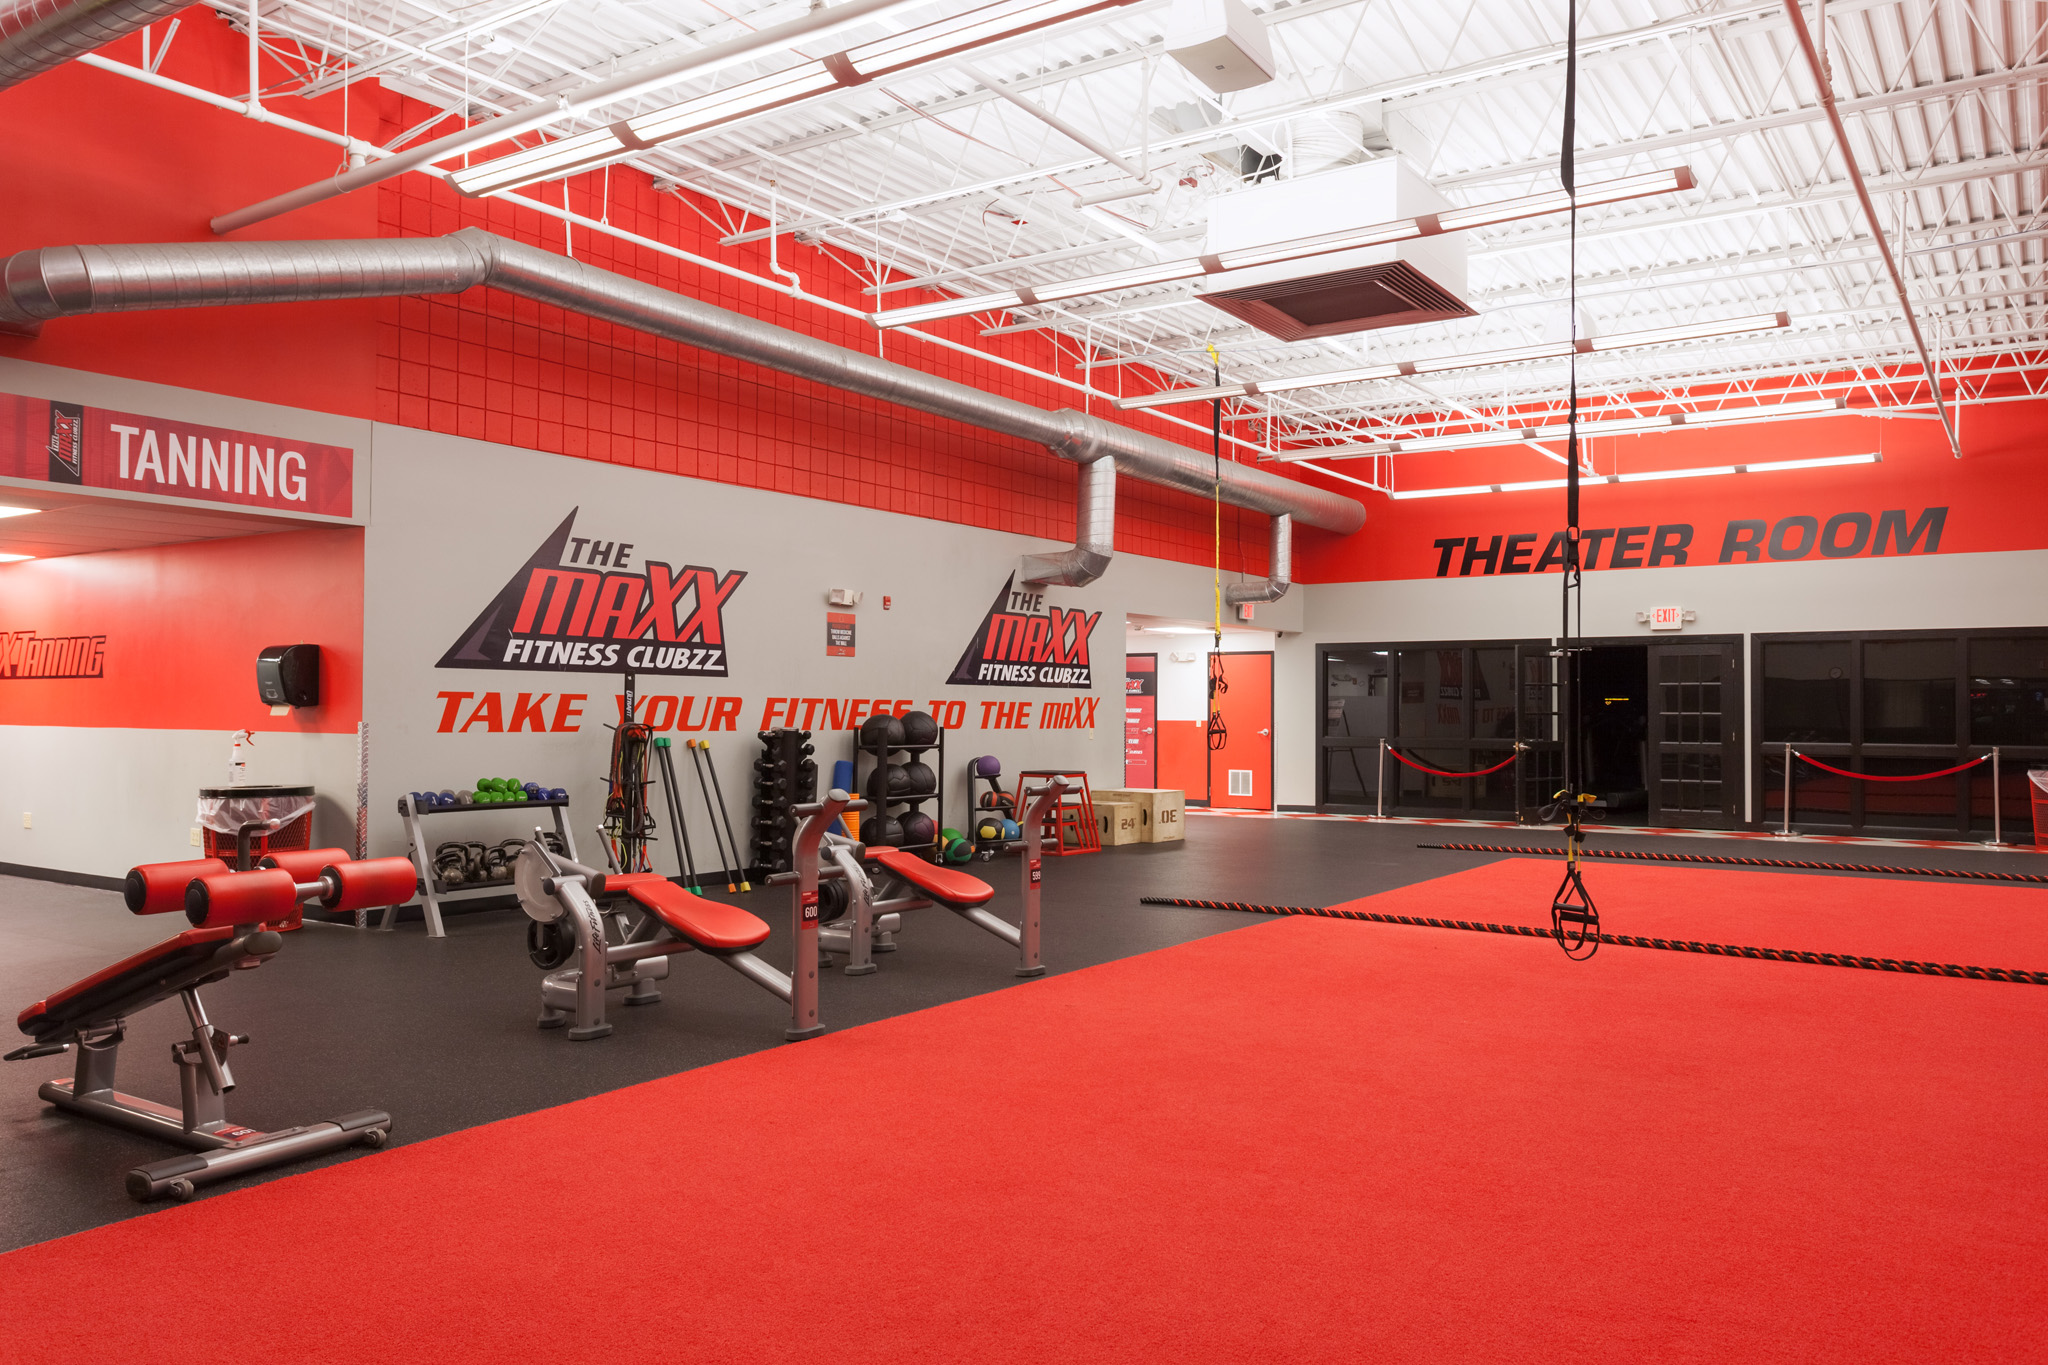 Lincoln Ri Rhode Island High Energy Gym Maxx Fitness Clubzz